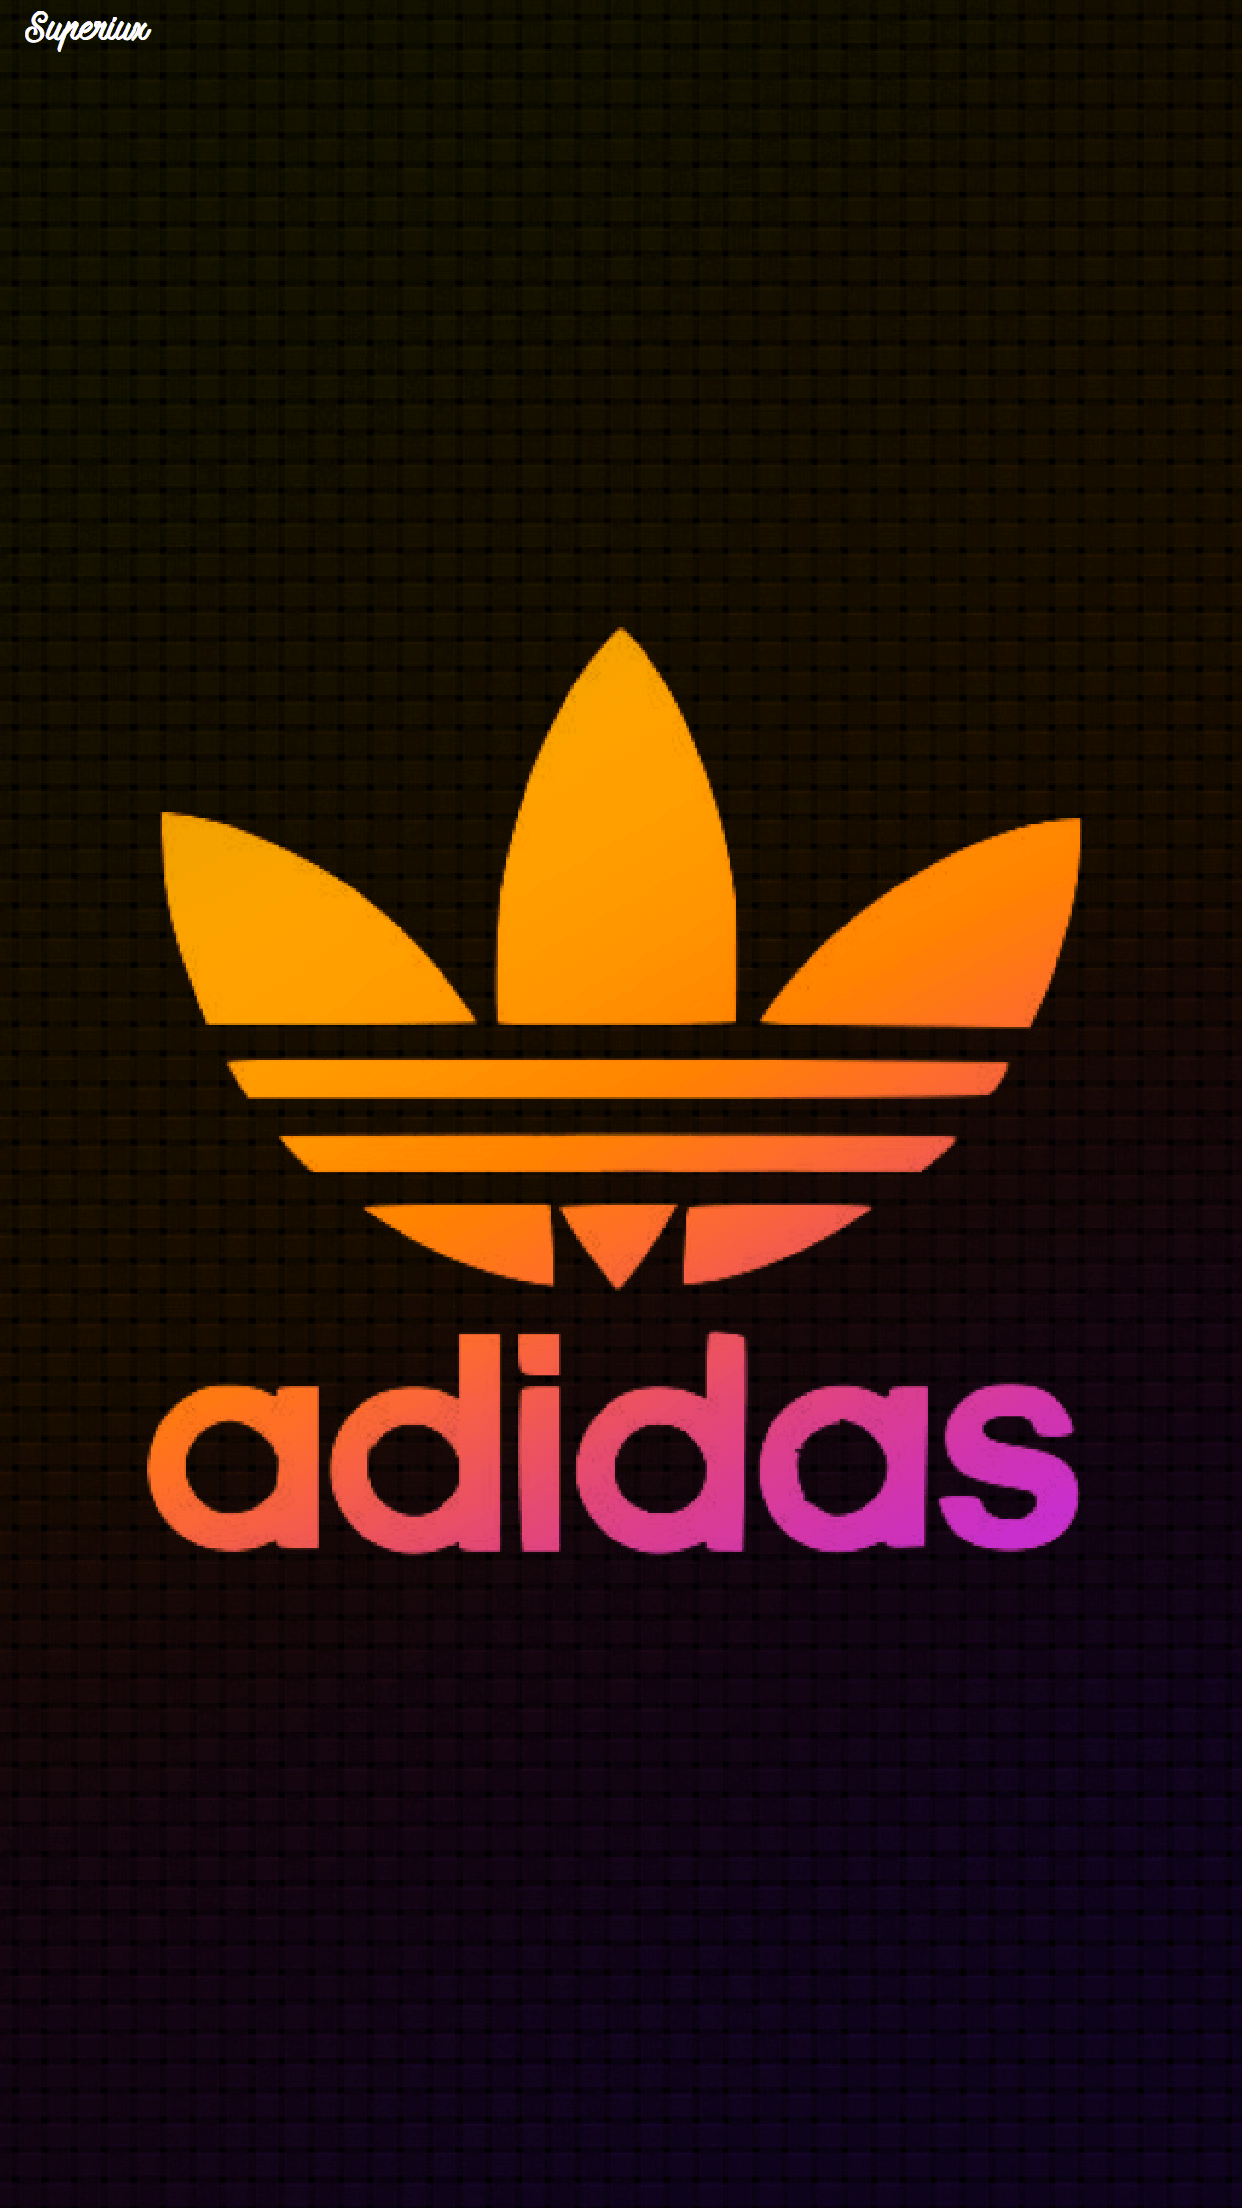 Supreme Adidas Logo - Adidas Wallpaper Logo | Adidas wallpapers in 2019 | Wallpaper, Logos ...